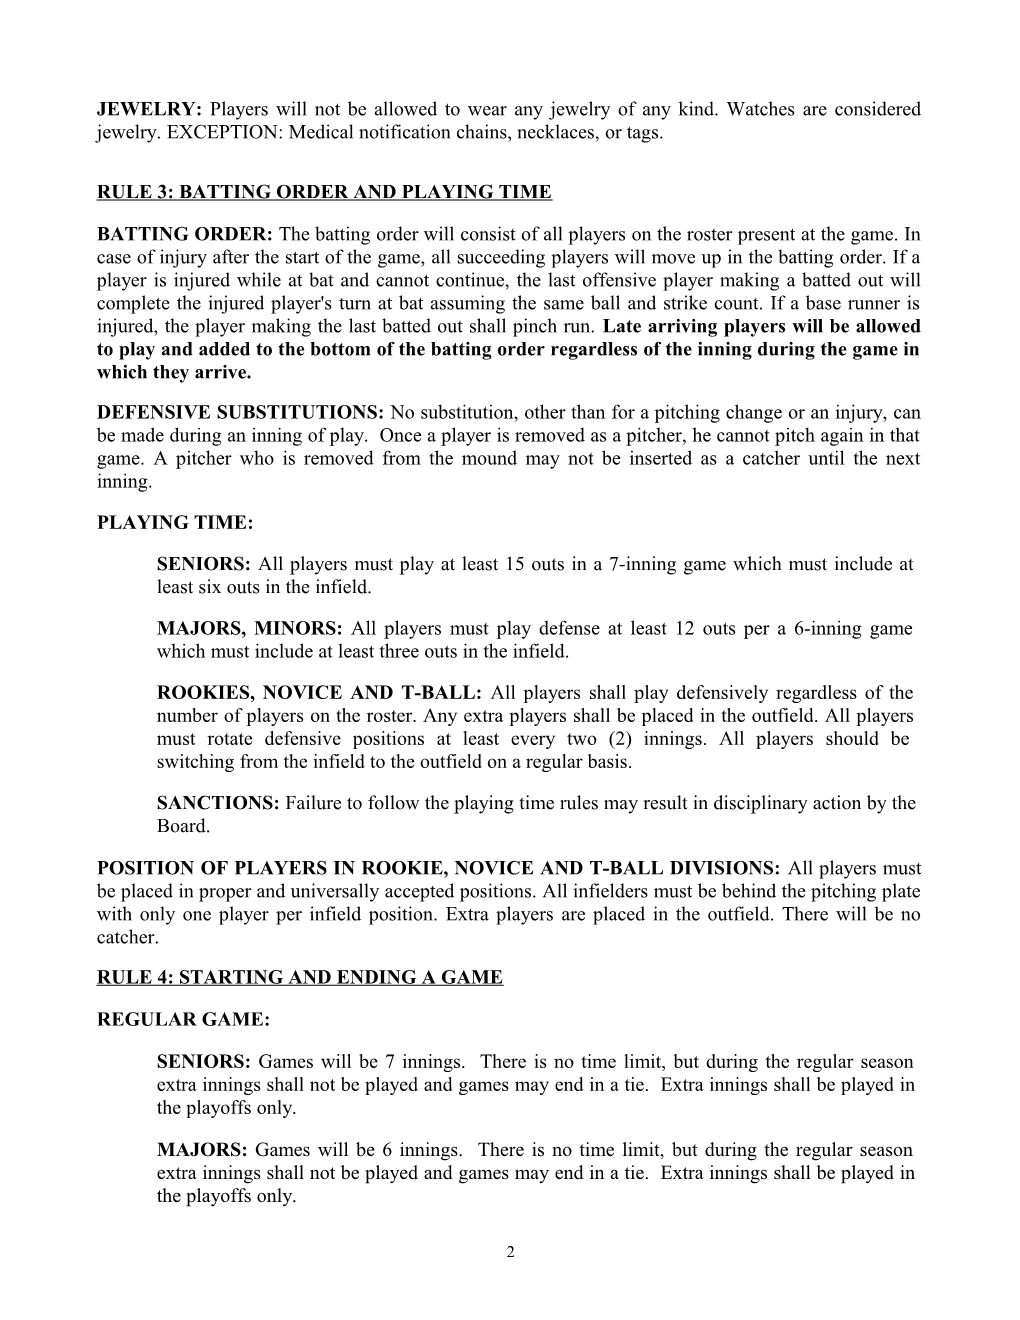 GLOUCESTER TOWNSHIP BASEBALL RULES (Revised 4/12)